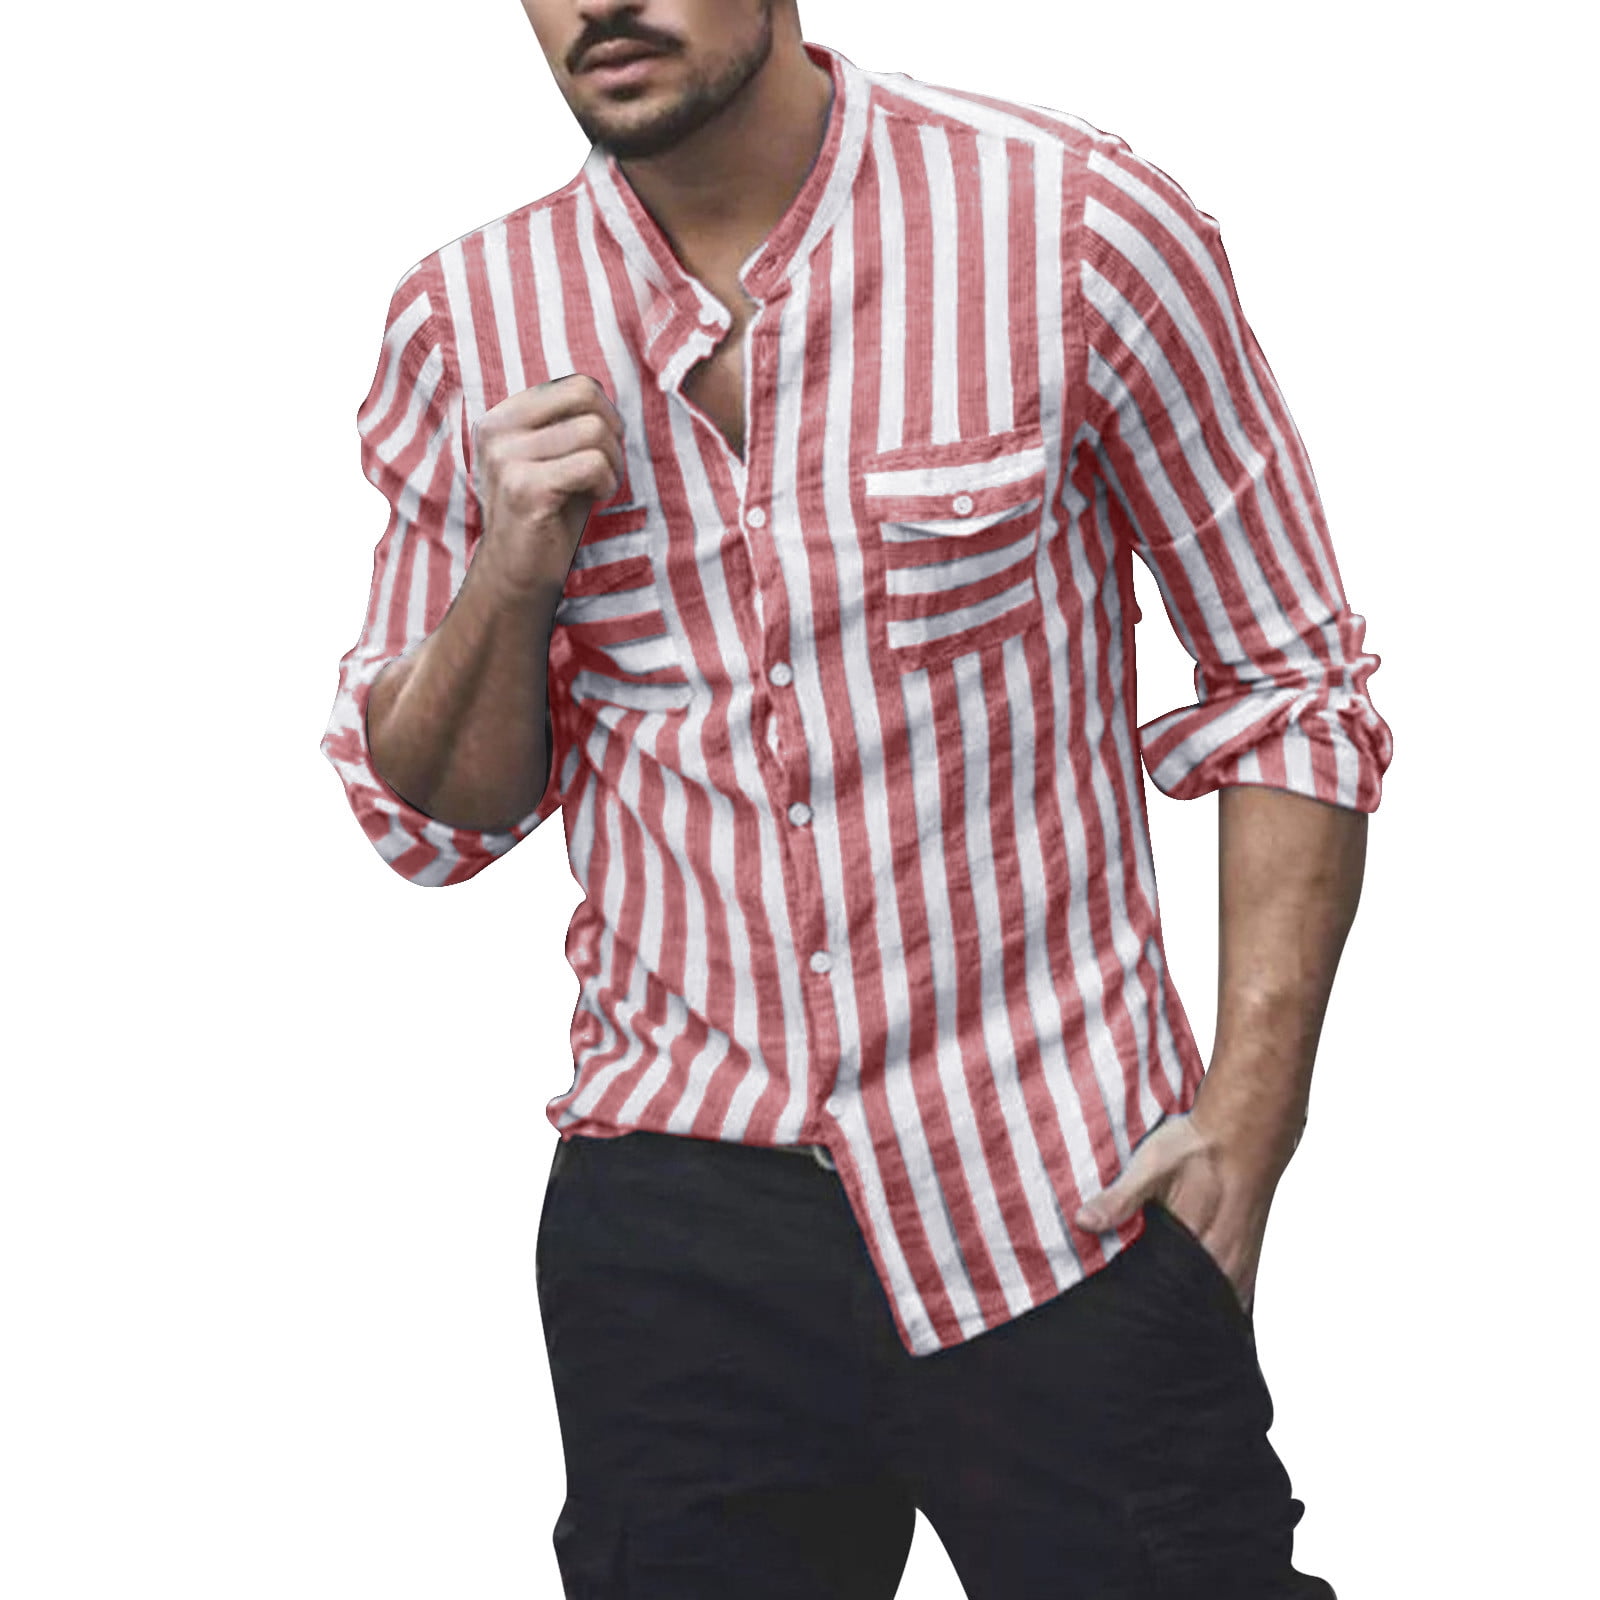 Fashion Formal Shirts Long Sleeve Shirts Kapalua Long Sleeve Shirt red-white striped pattern casual look 